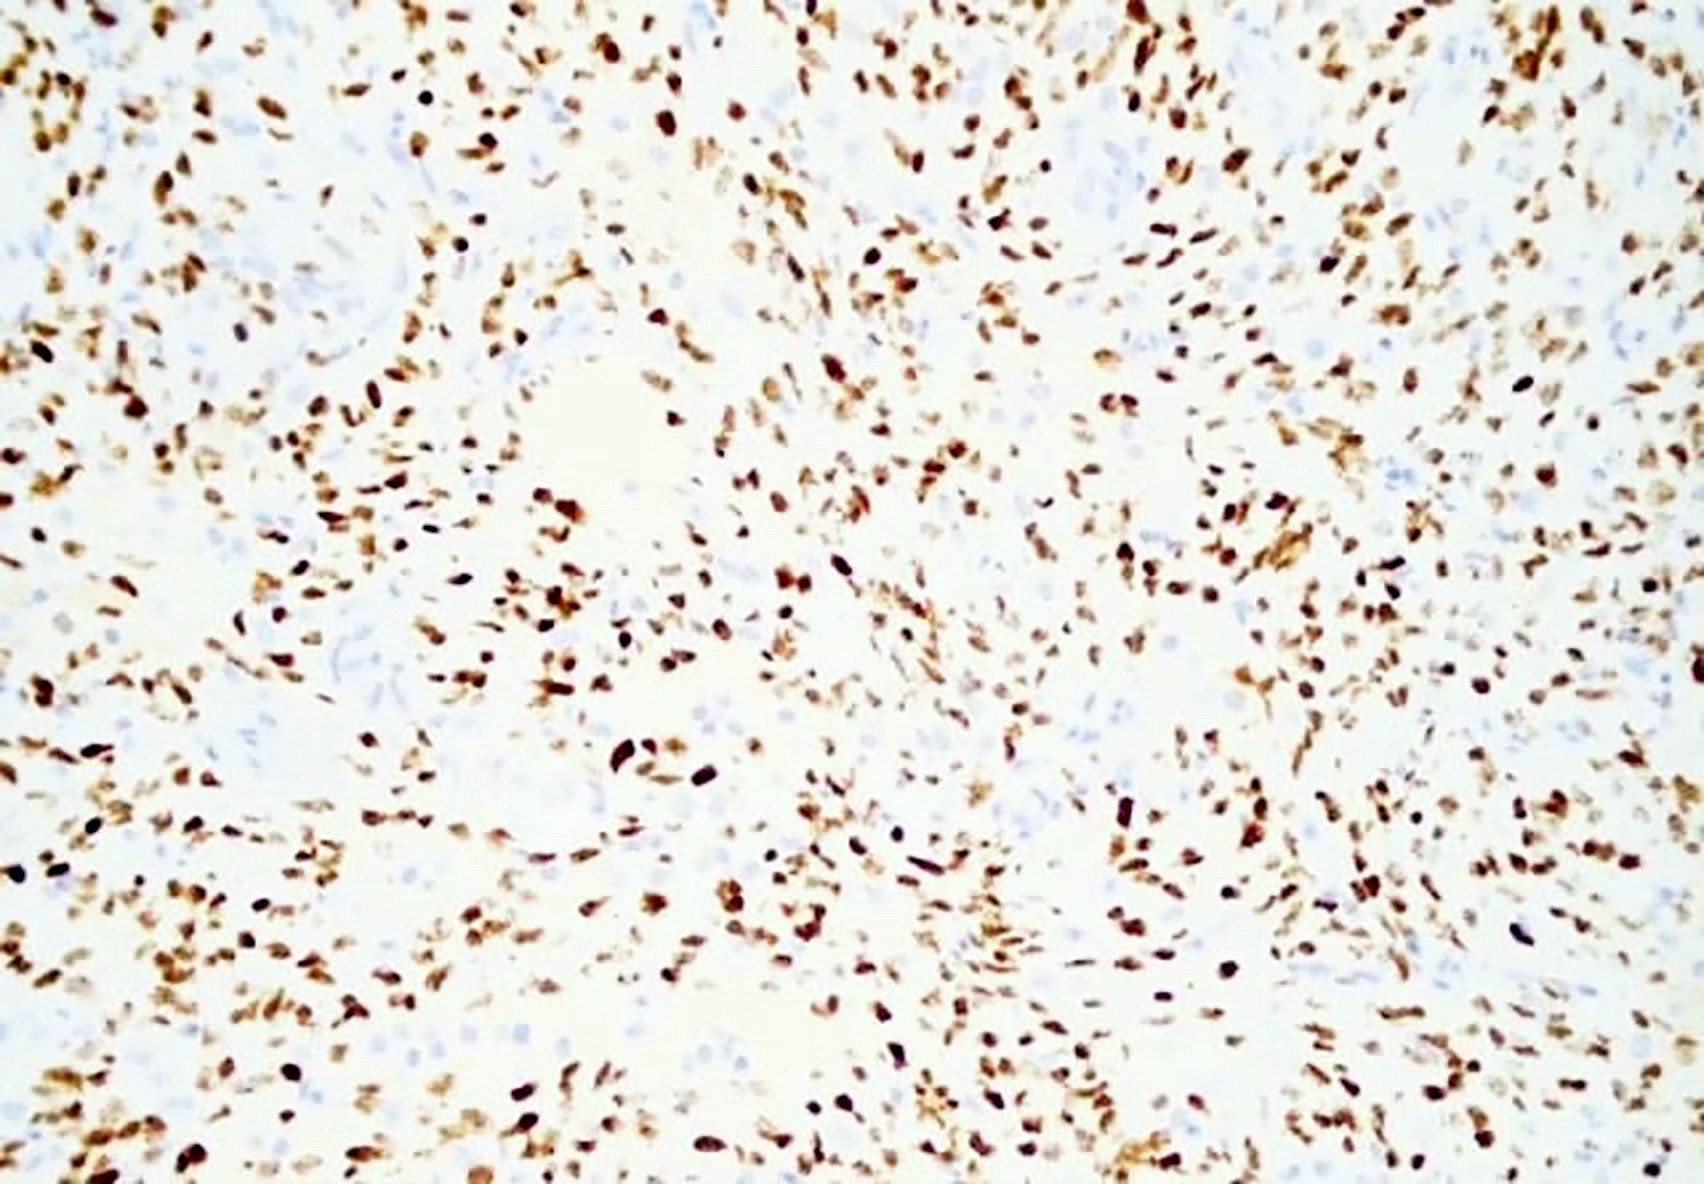 Kaposi sarcoma in a case of HHV8 MCD, HHV8